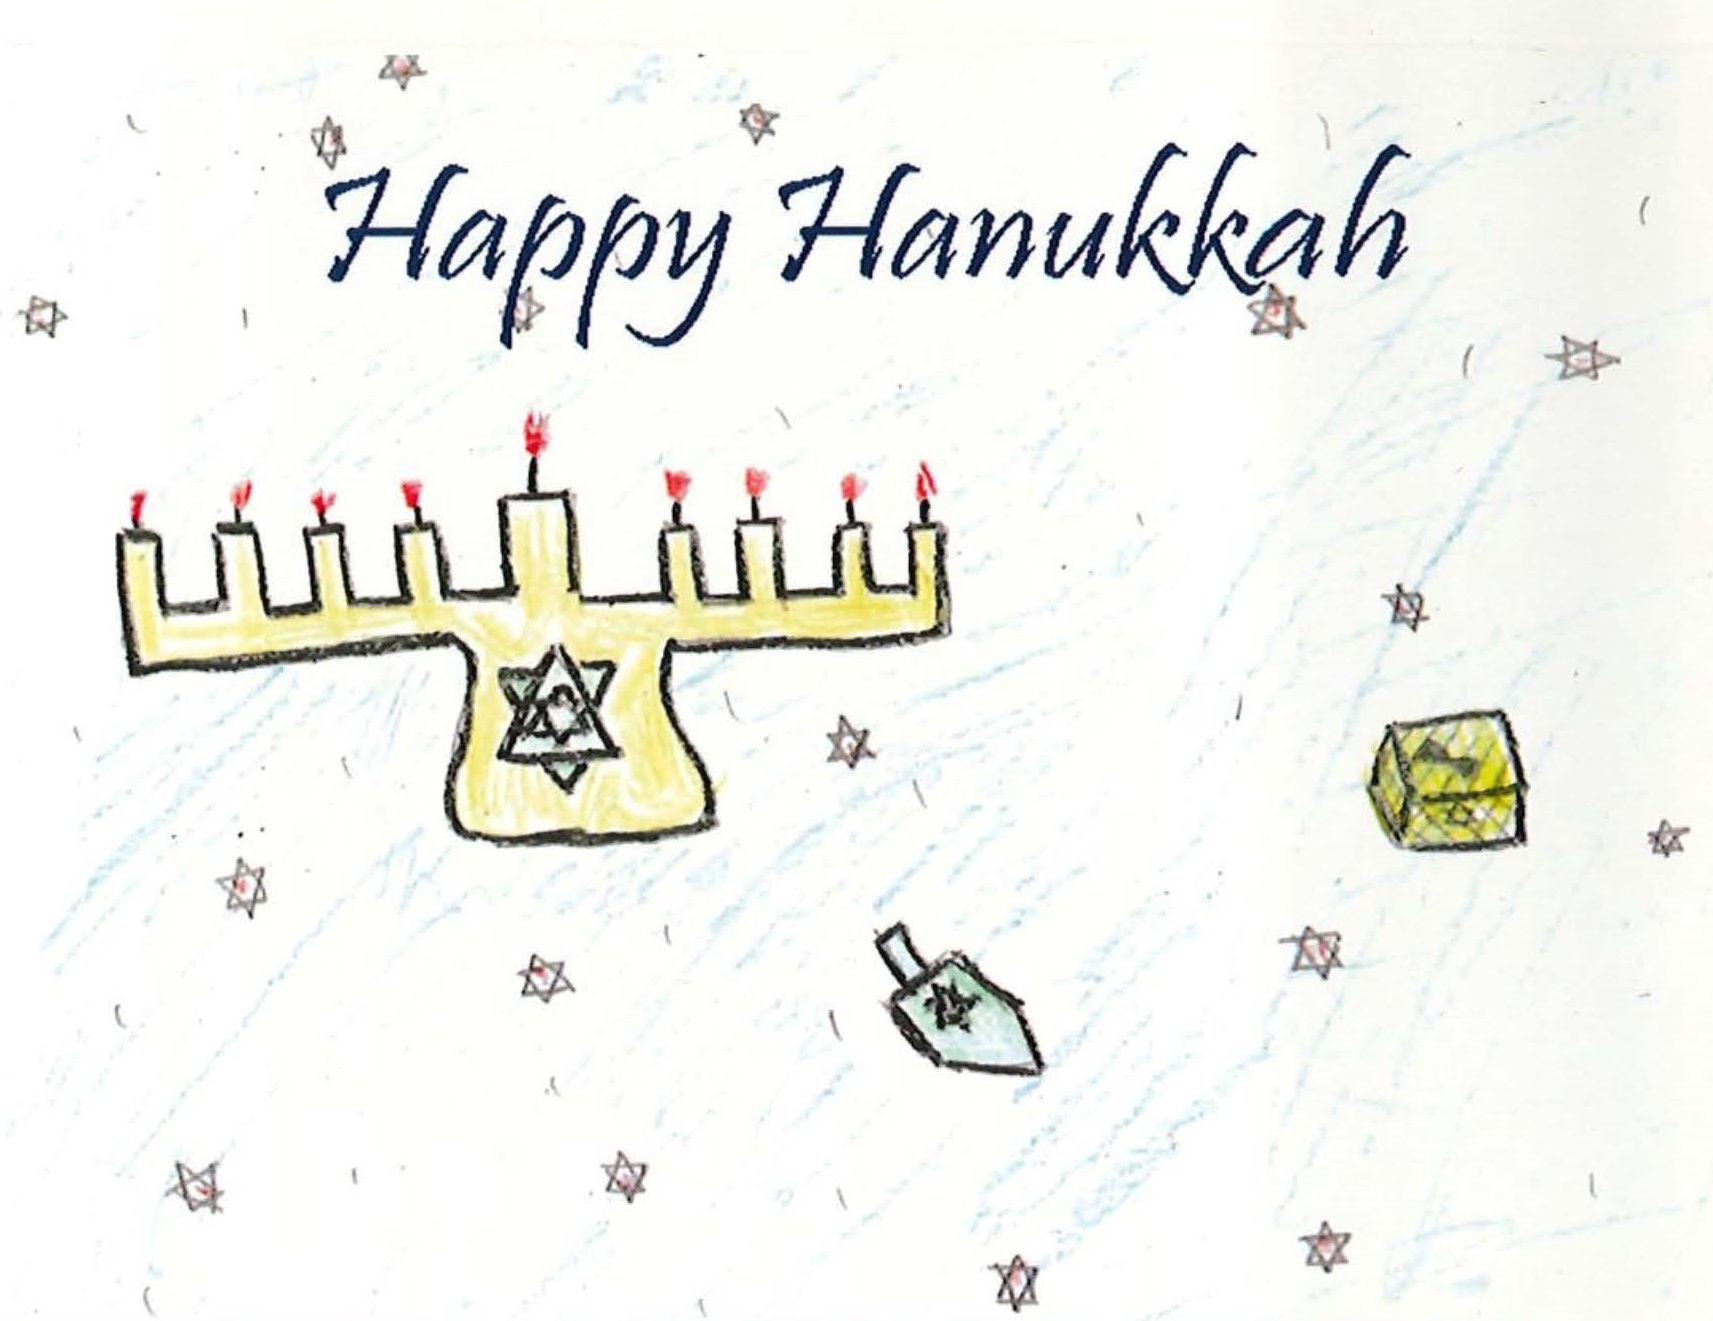 00-01: Happy Hanukkah